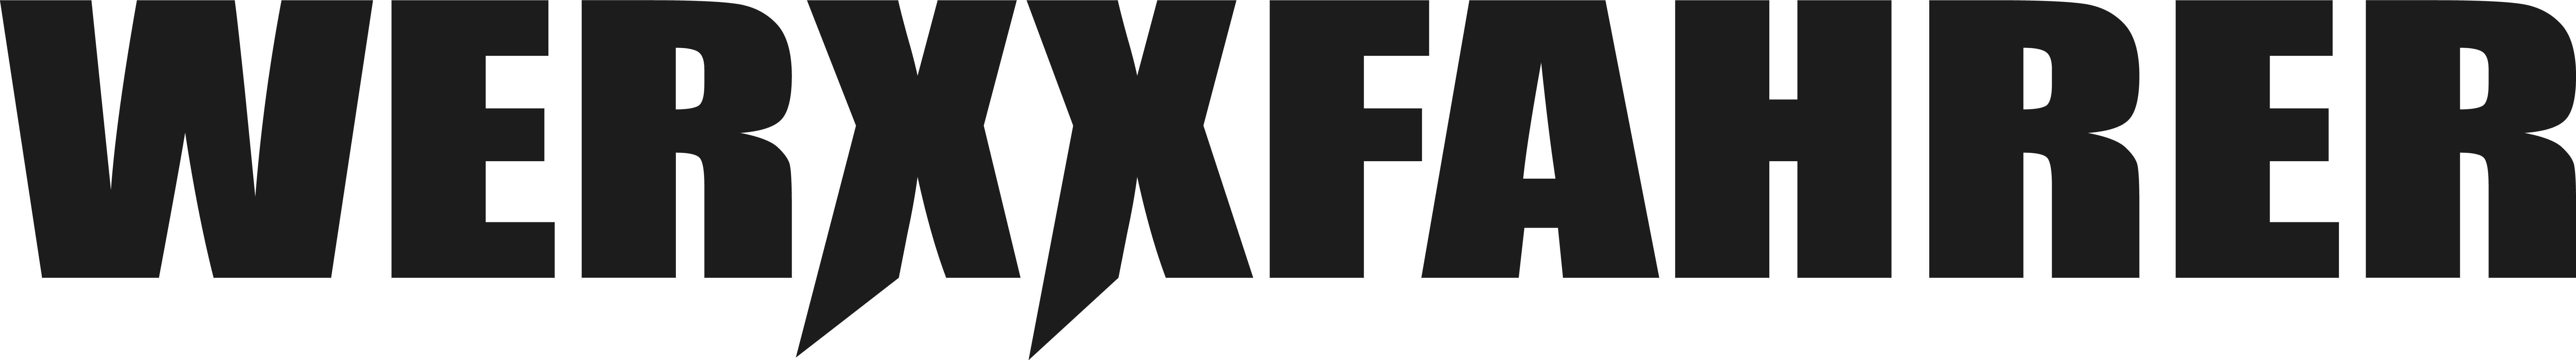 Werxxfahrer Logo